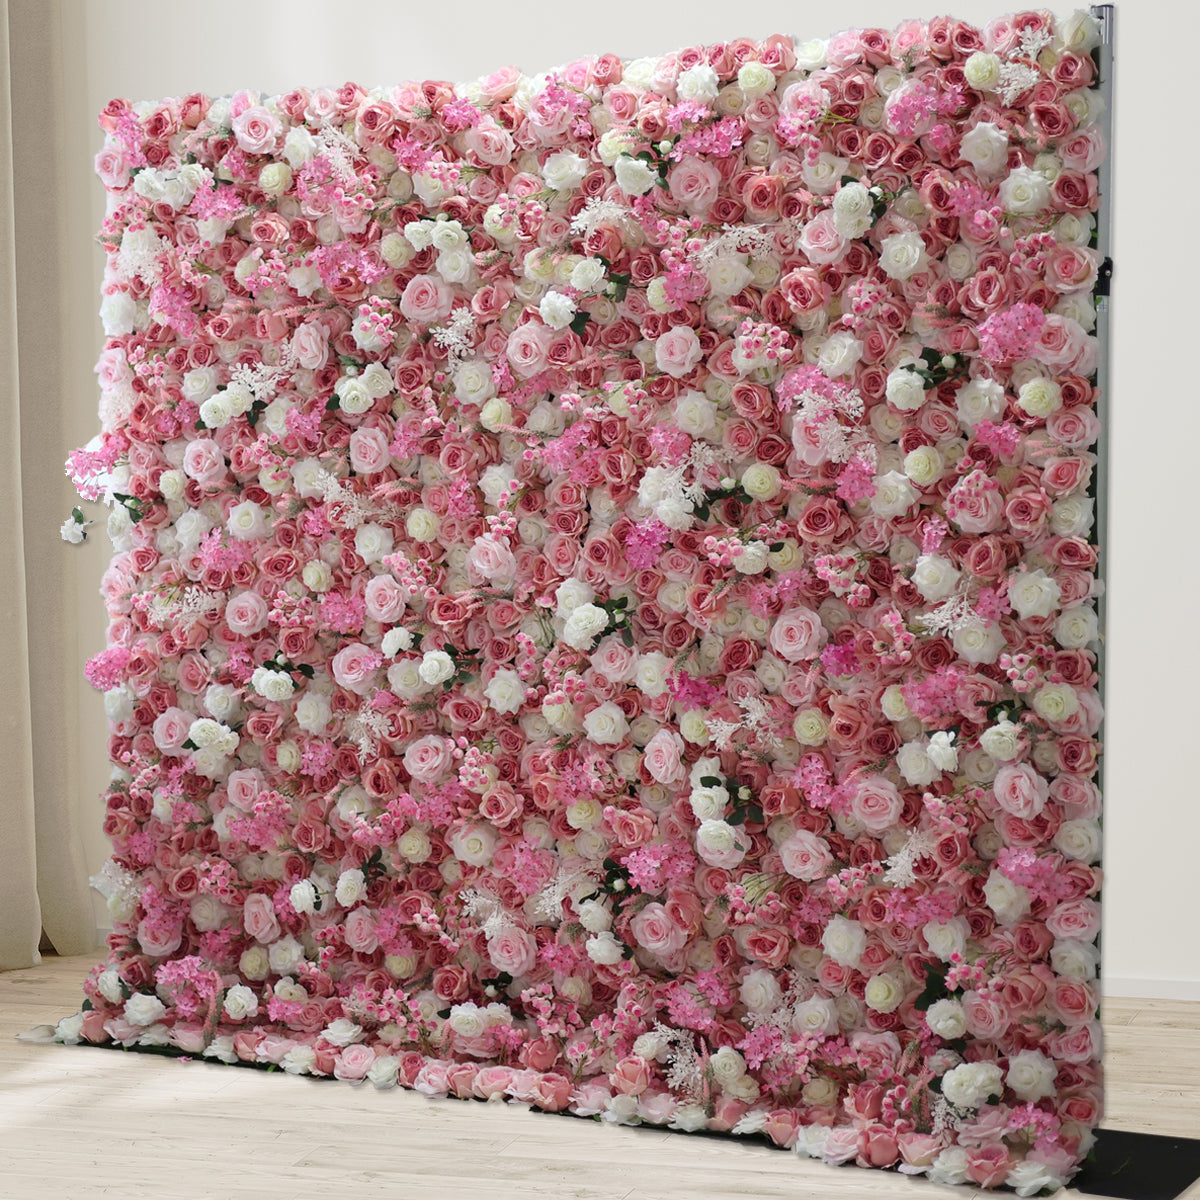 3D Artificial Flower Wall Arrangement Wedding Party Birthday Backdrop Decor HQ1187